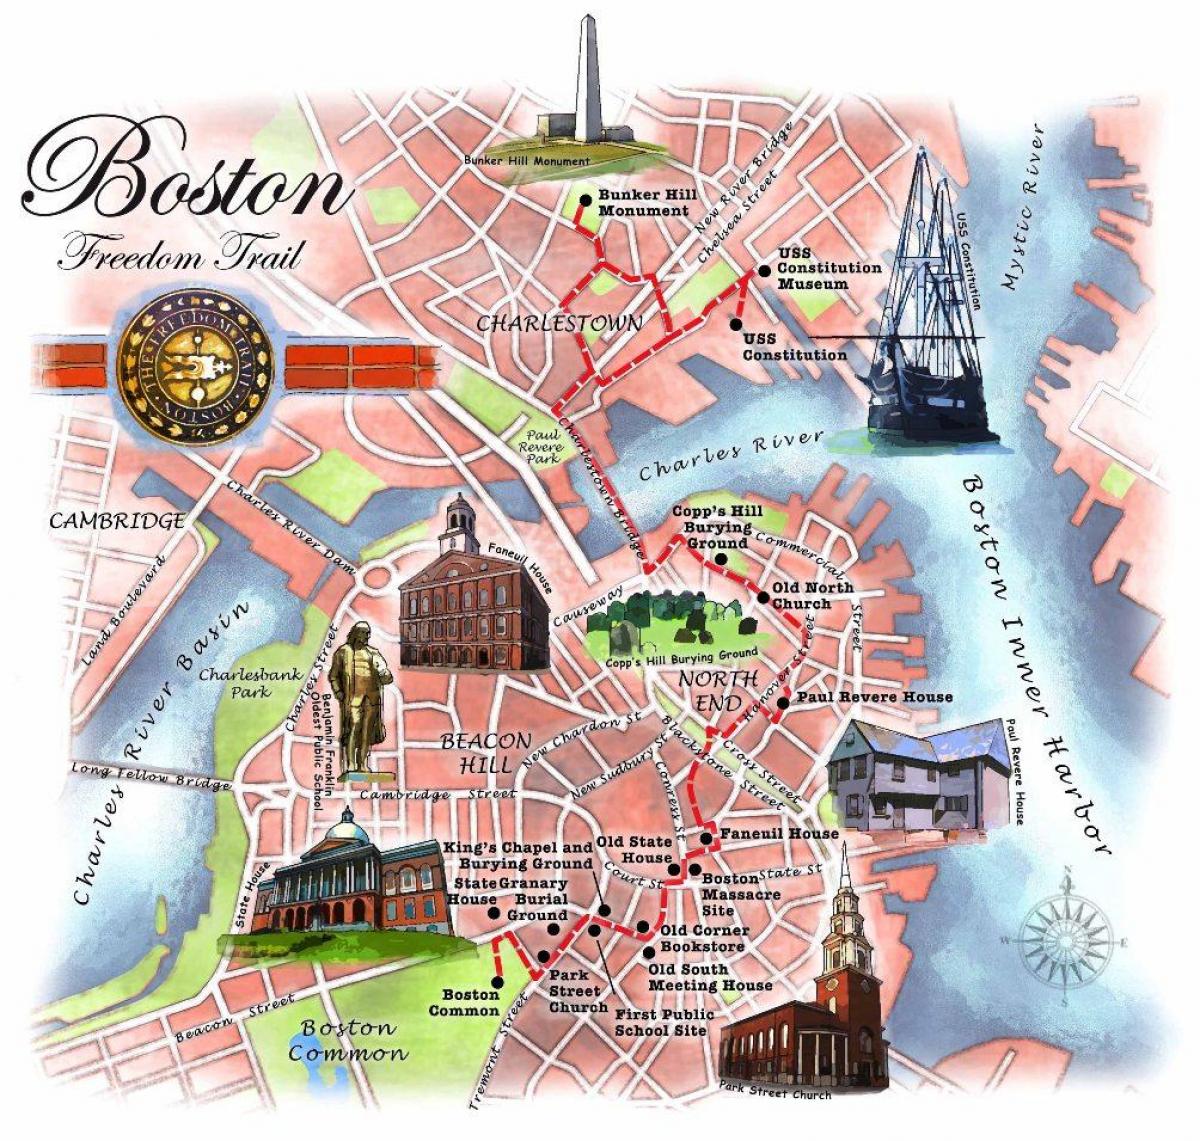 mapa ng Boston freedom trail